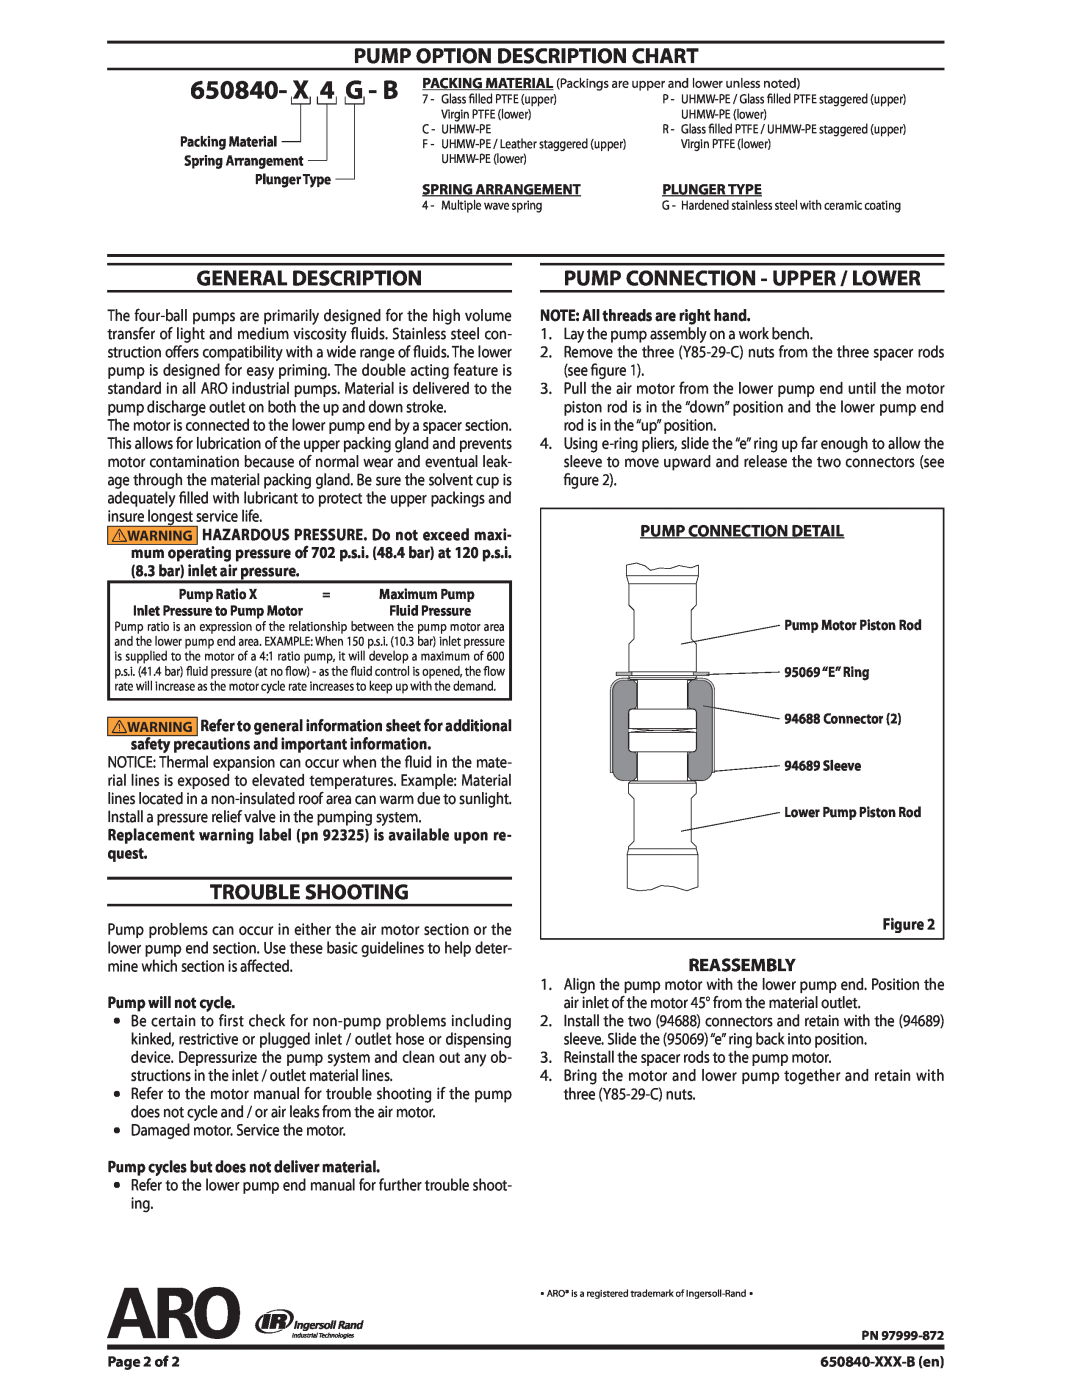 Ingersoll-Rand 650840-XXX-B specifications Pump Option Description Chart, General Description, Trouble Shooting, Reassembly 